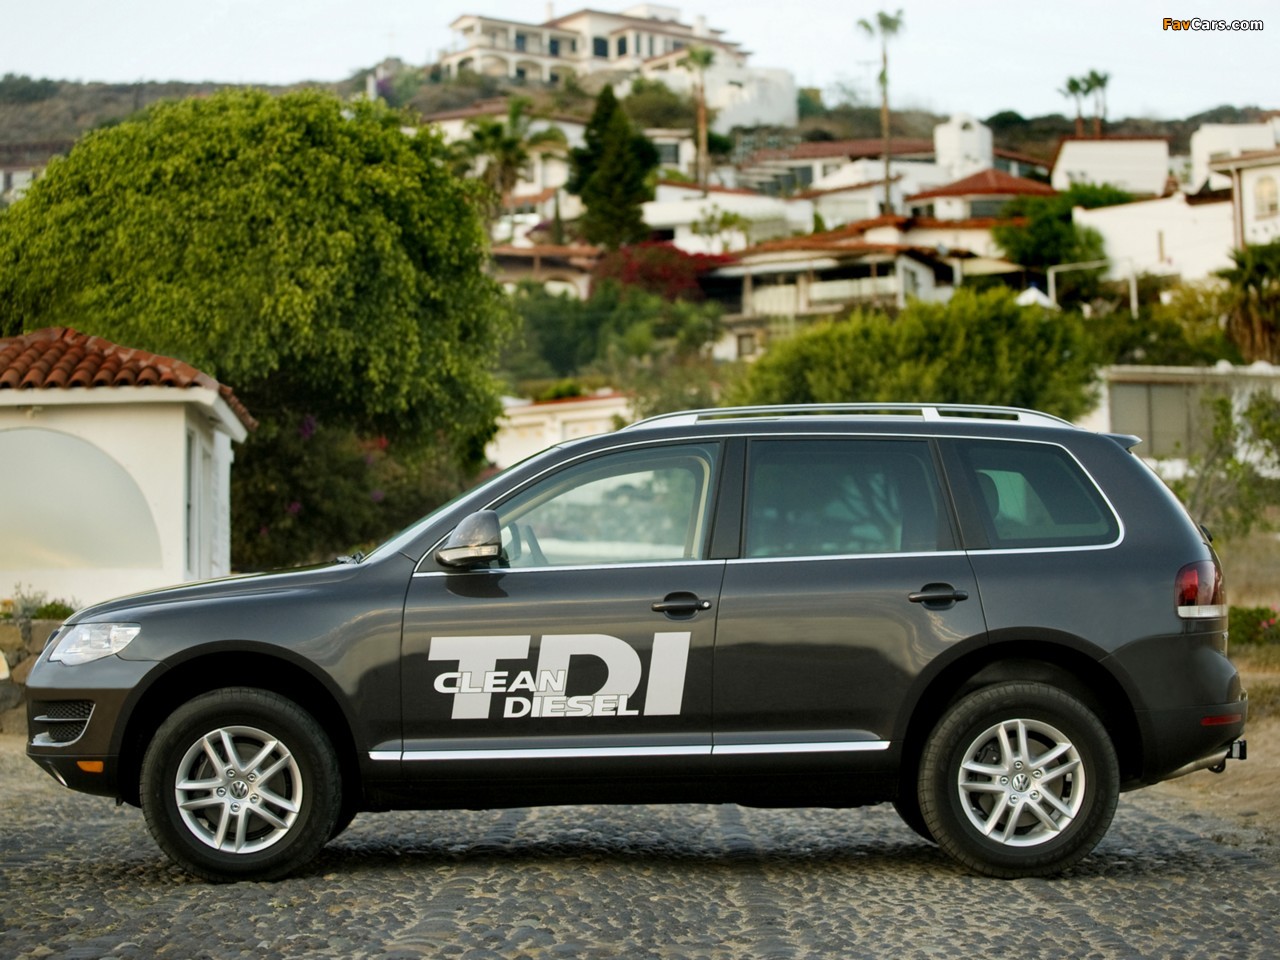 Volkswagen Touareg V6 TDI Clean Diesel 2009 images (1280 x 960)